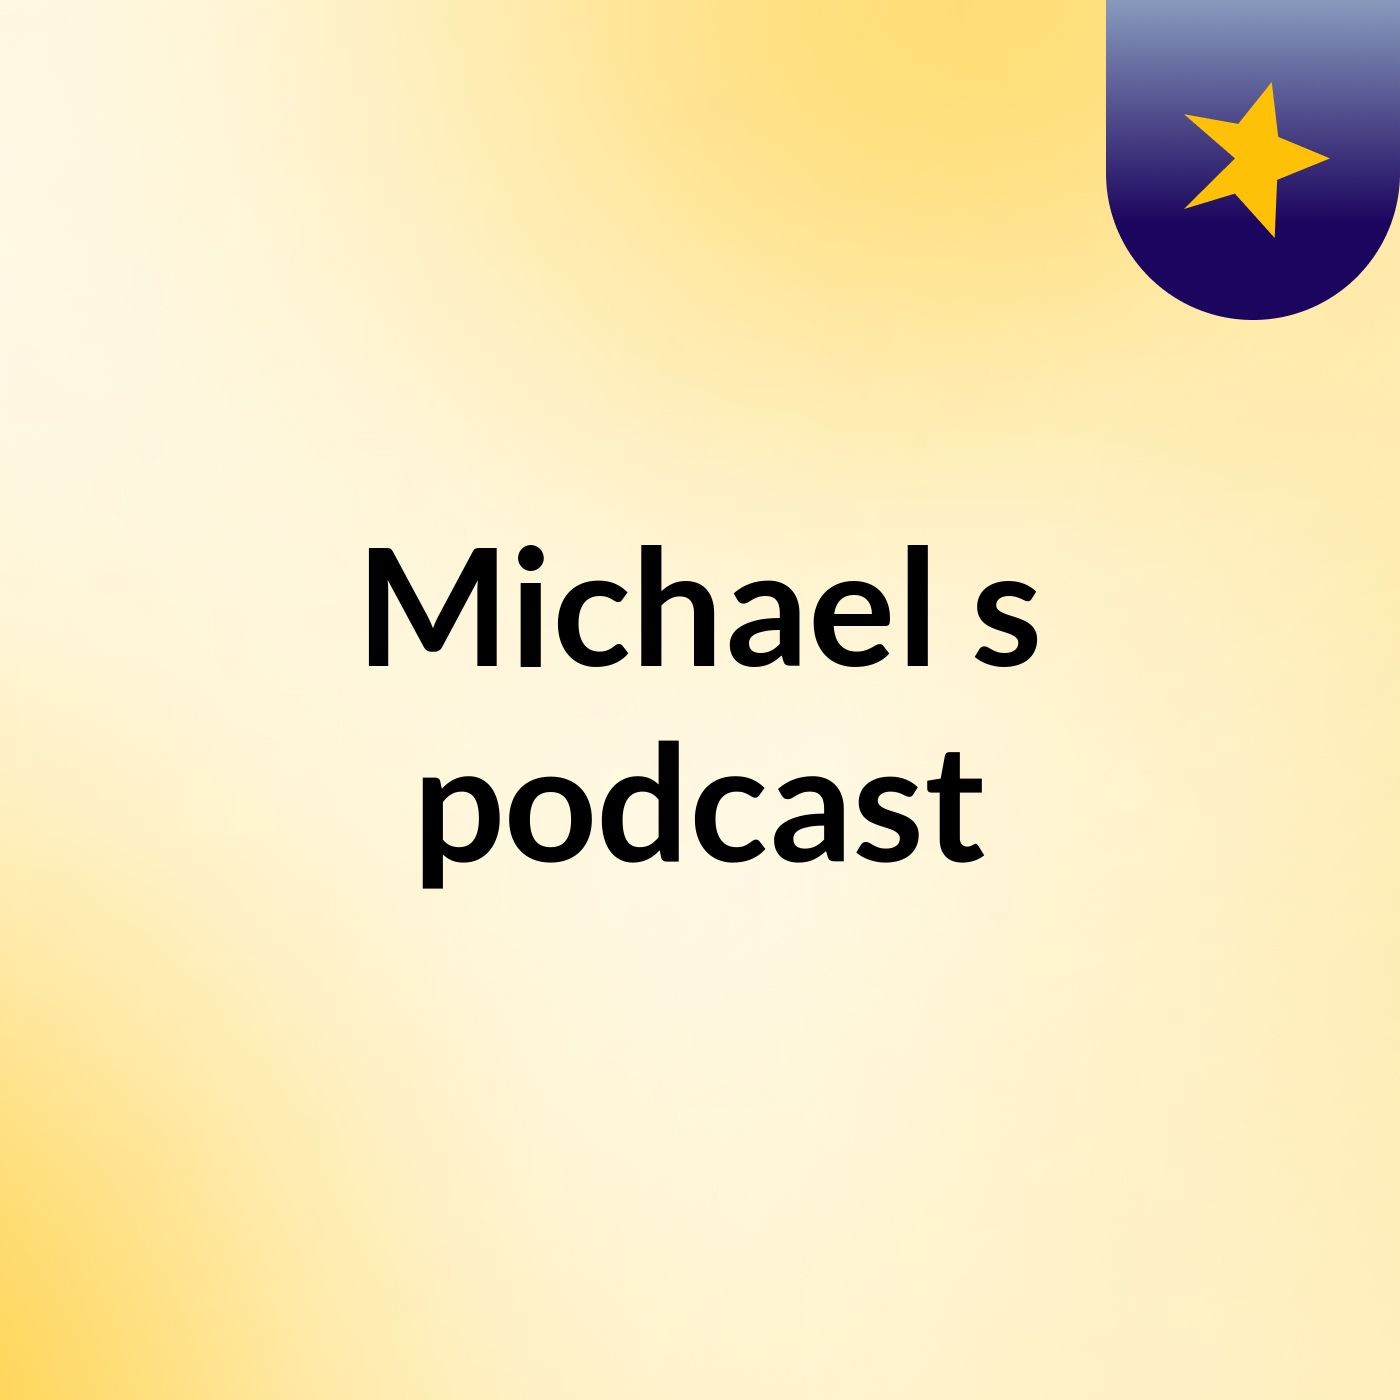 Michael's podcast